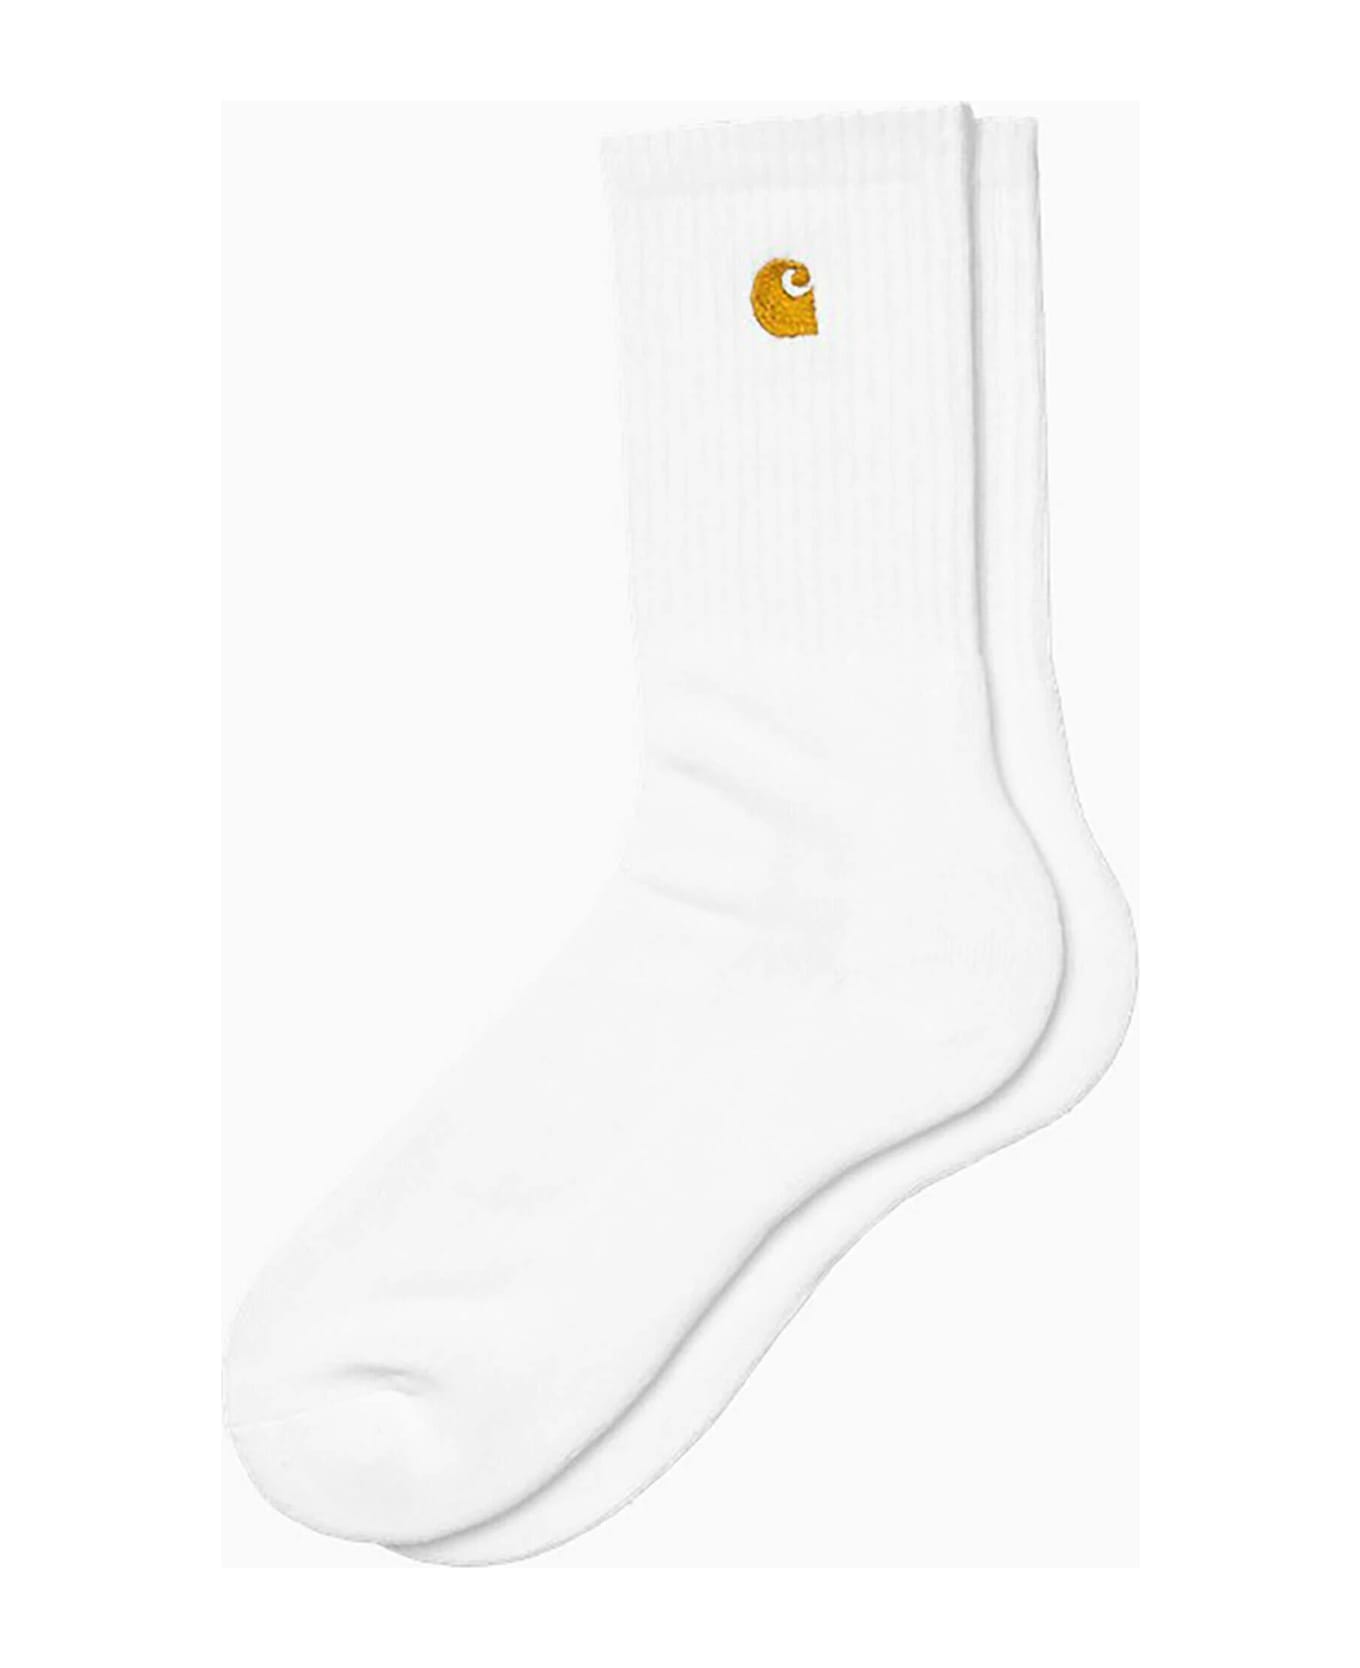 Carhartt Chase Socks - Rxx White Gold 靴下